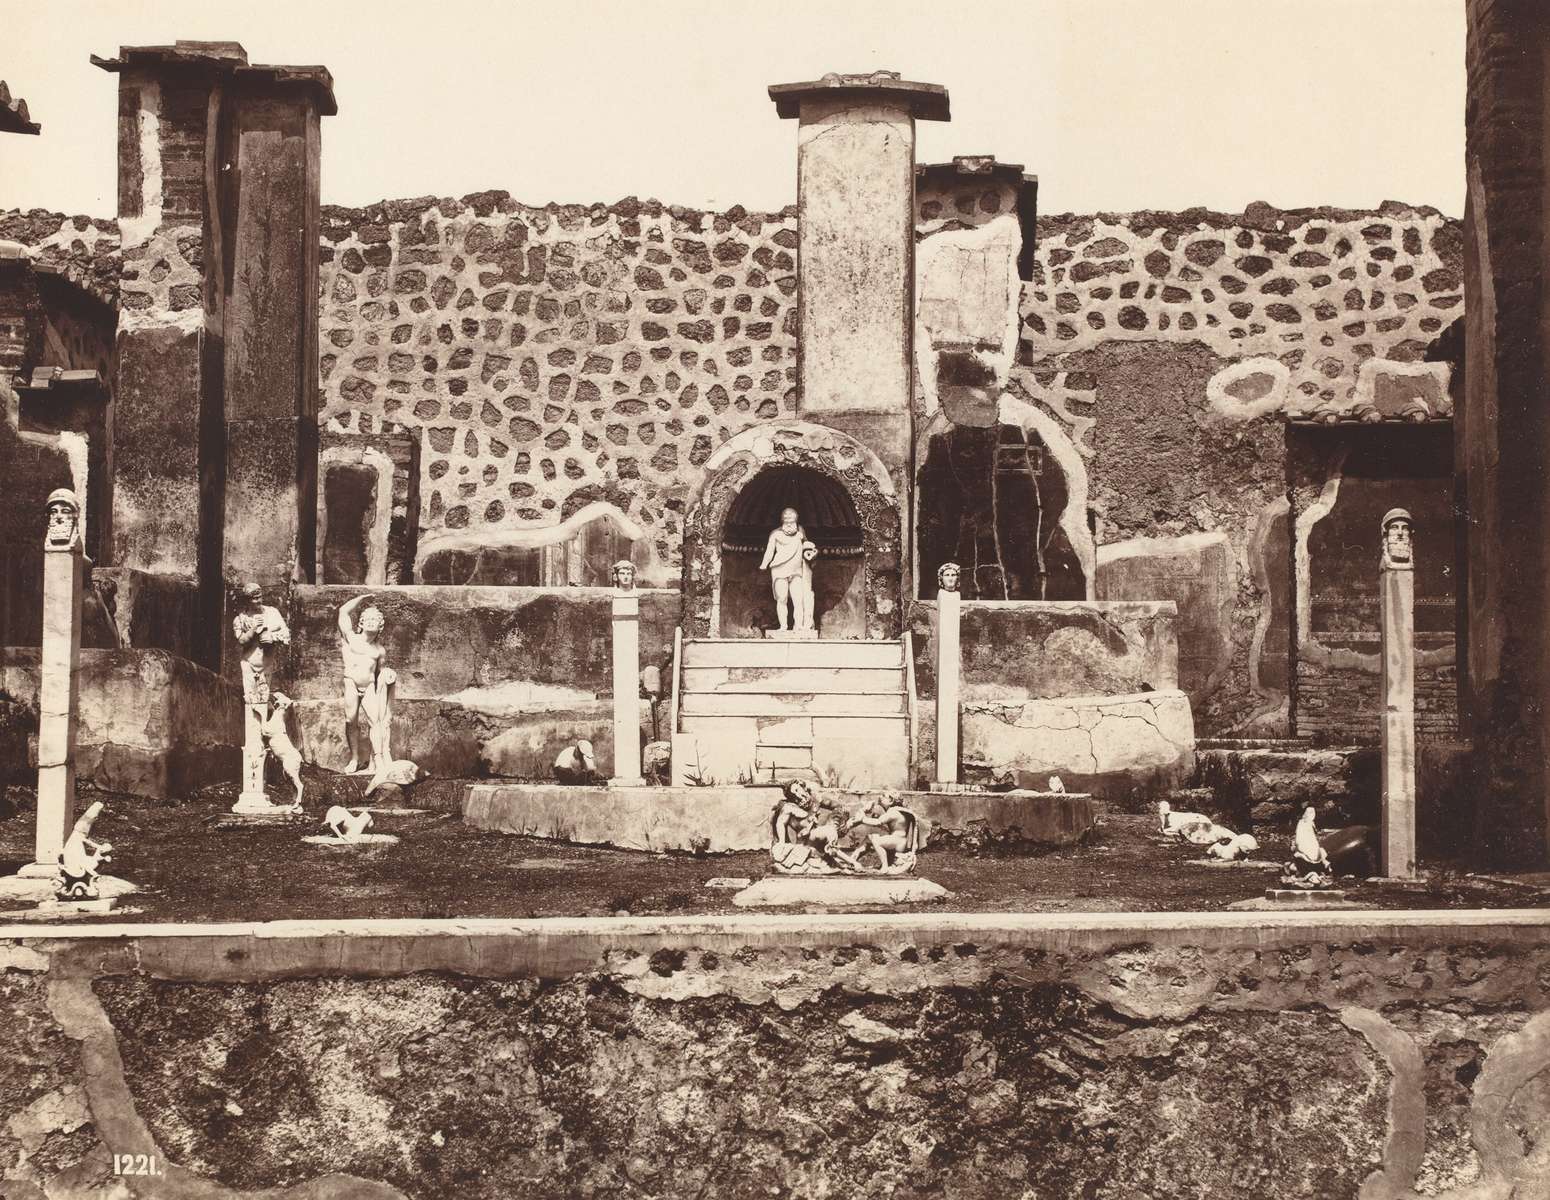 Giorgio Sommer (Italian, born Germany 1824 - 1872 ), View of Pompeii, Casa di Marco Lucrezio, c. 1870, albumen print, Gift of Mary and Dan Solomon and Patrons\' Permanent Fund